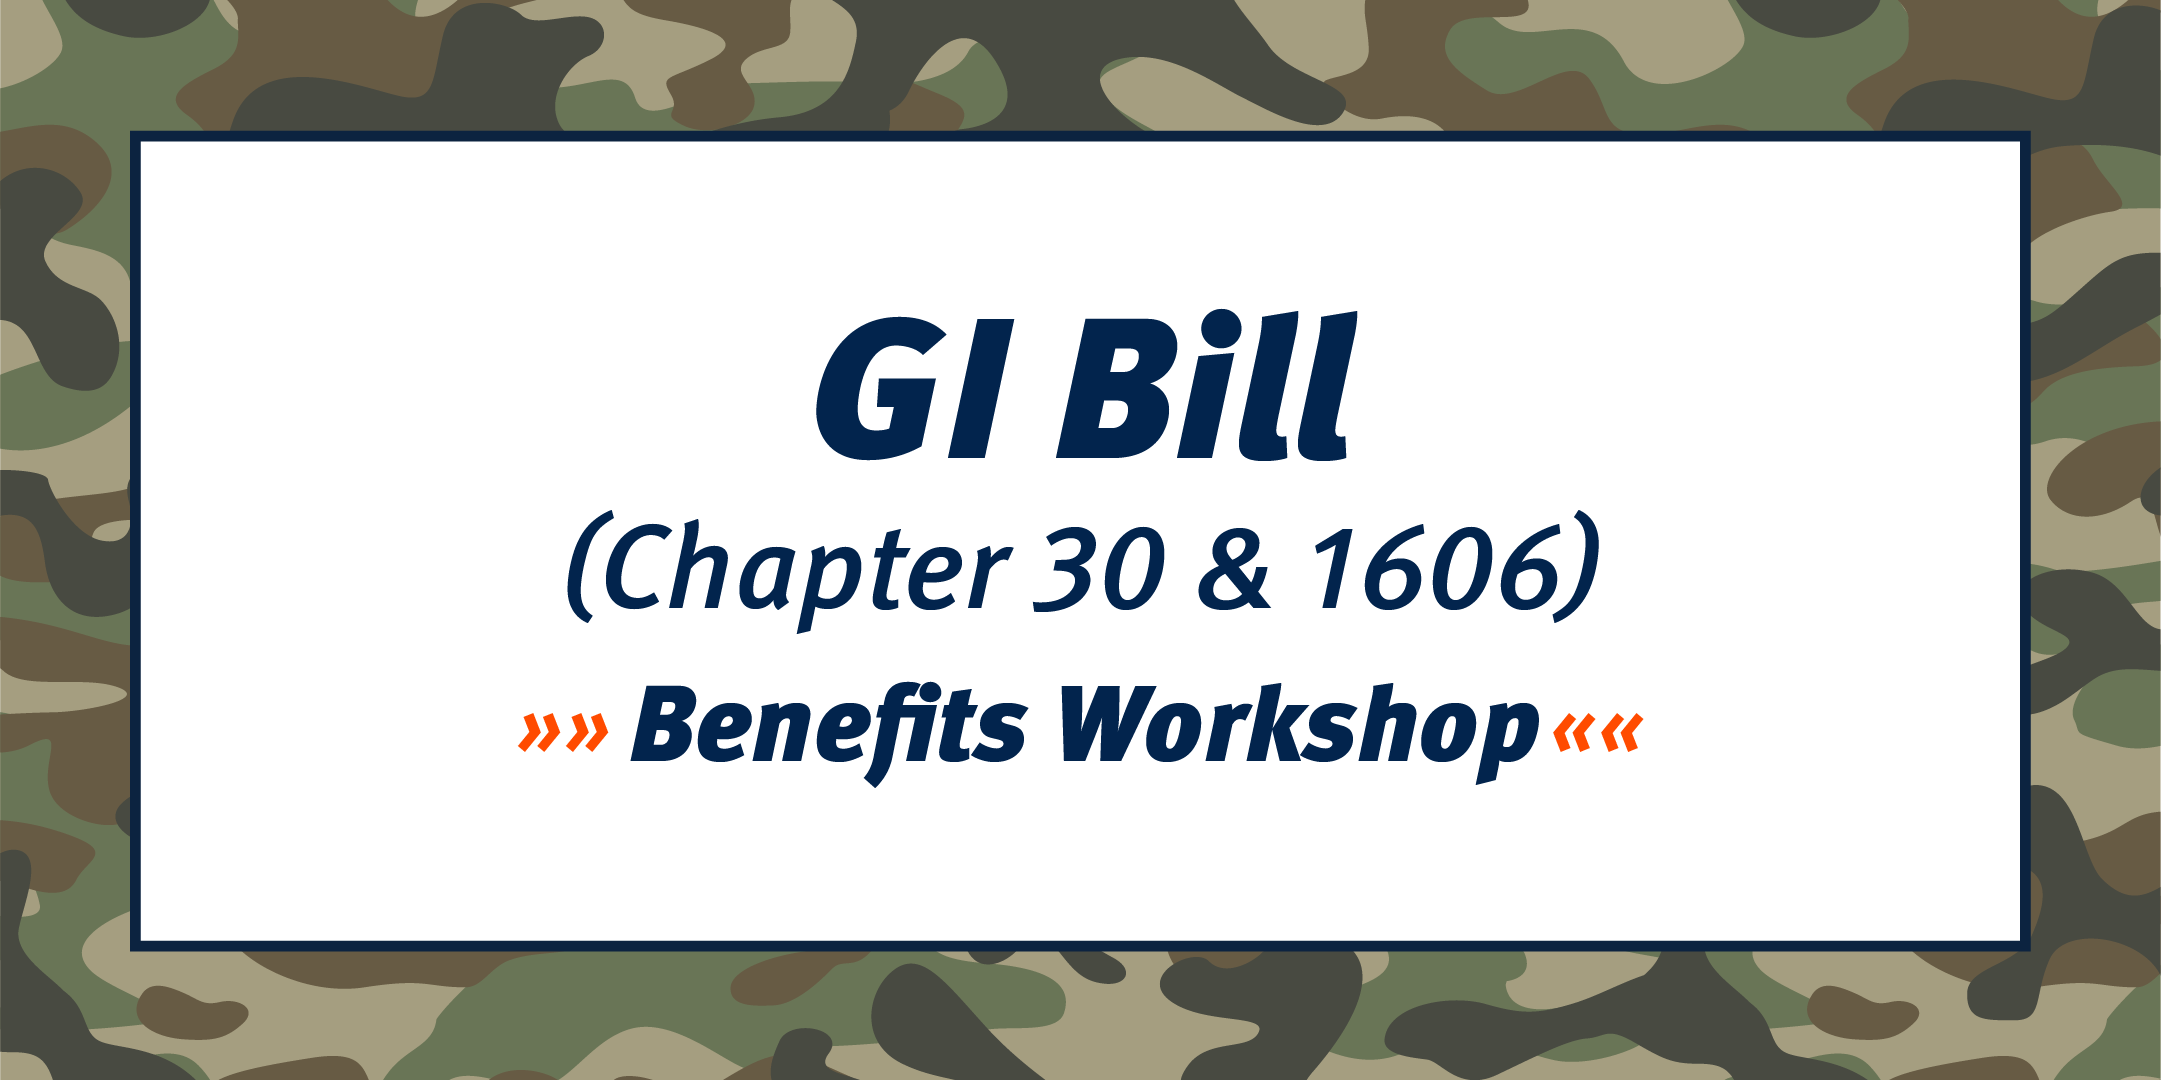 Montgomery GI Bill (Chapter 30 & 1606) Benefits Workshop